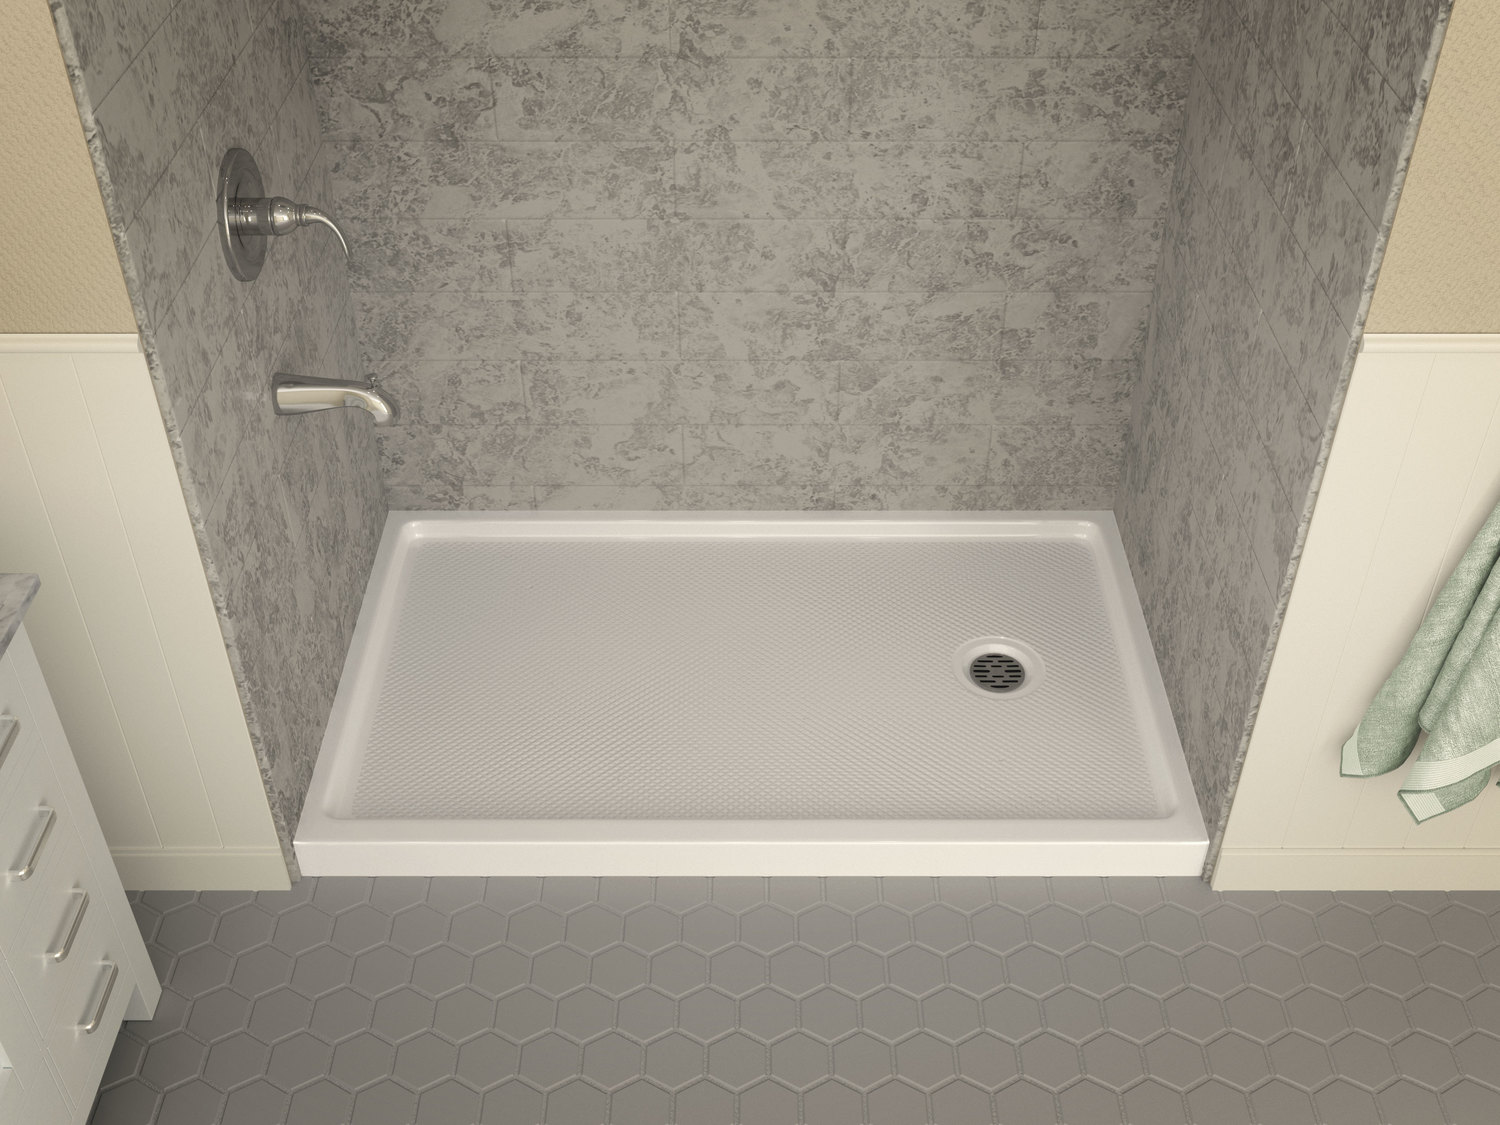 48 x 32 shower base Anzzi SHOWER - Shower Bases - Single Threshold White